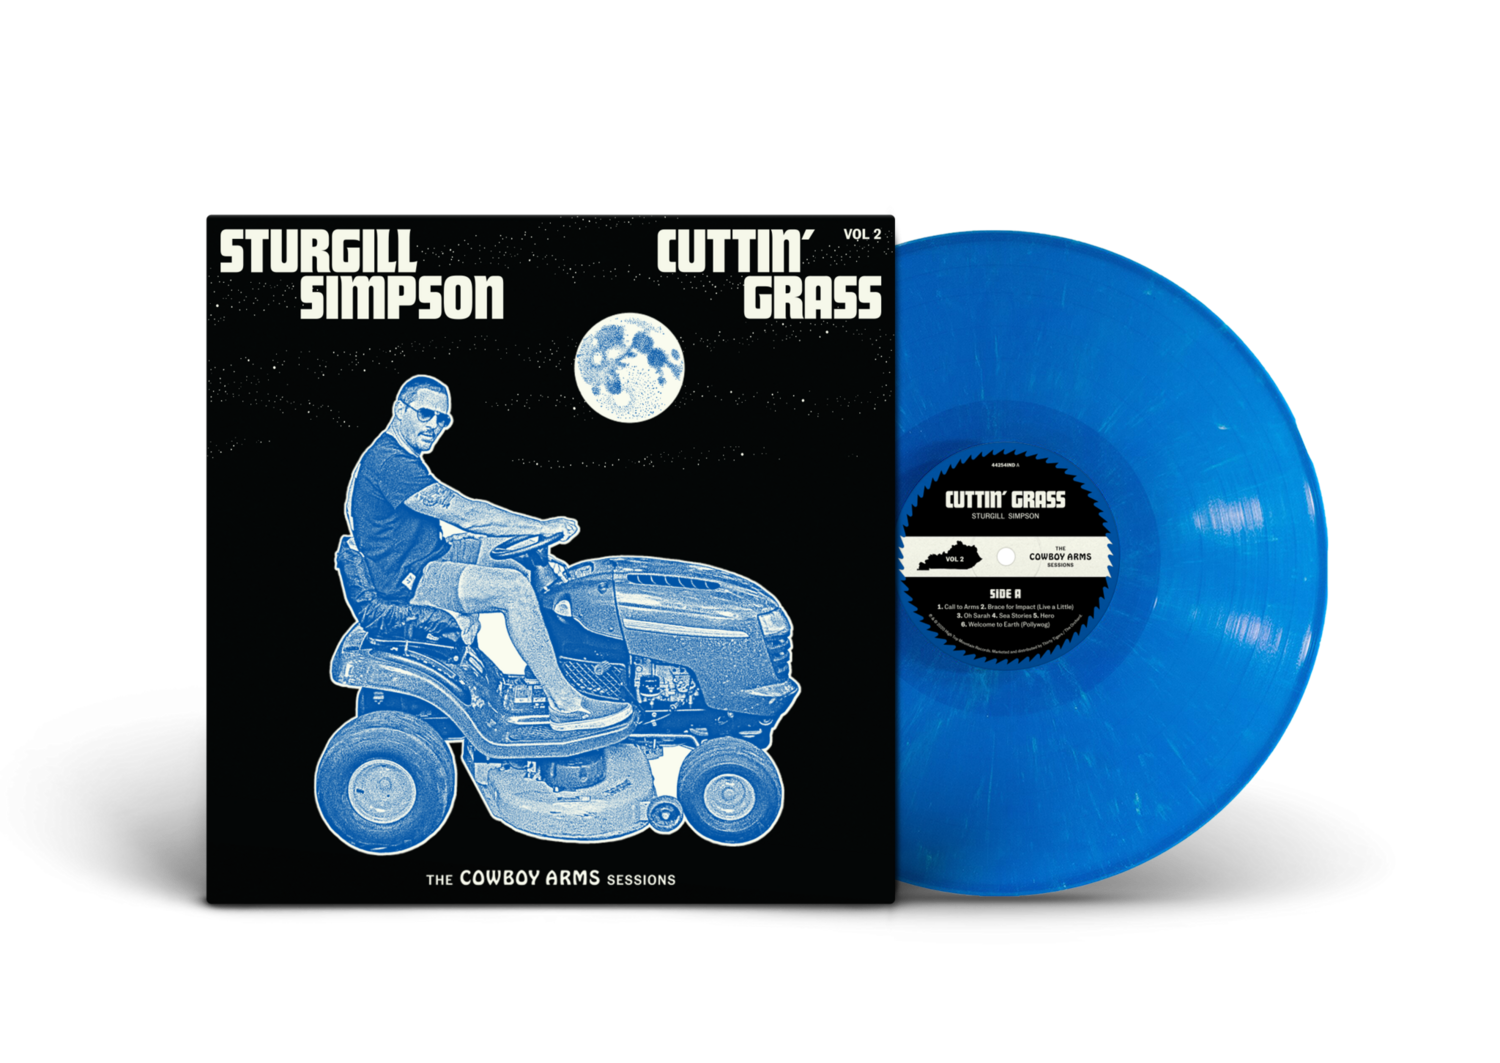 Sturgill Simpson / Cuttin' Grass 2 (Ex. Blue Swirl Vinyl)